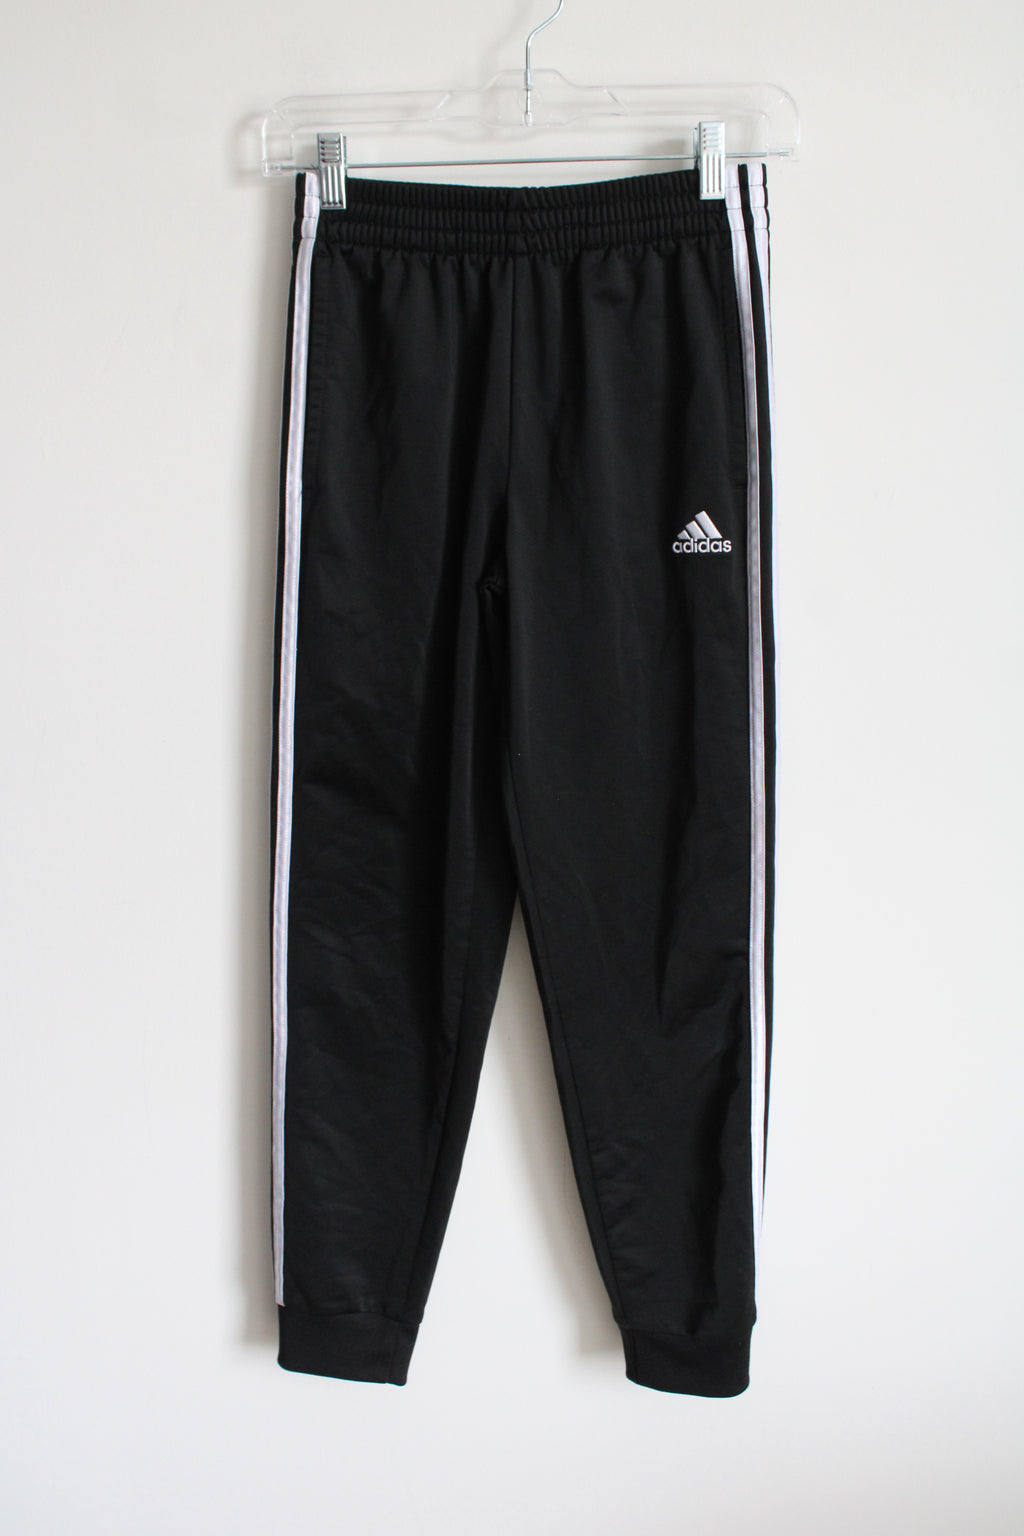 Adidas Black Track Pants | M (10/12)